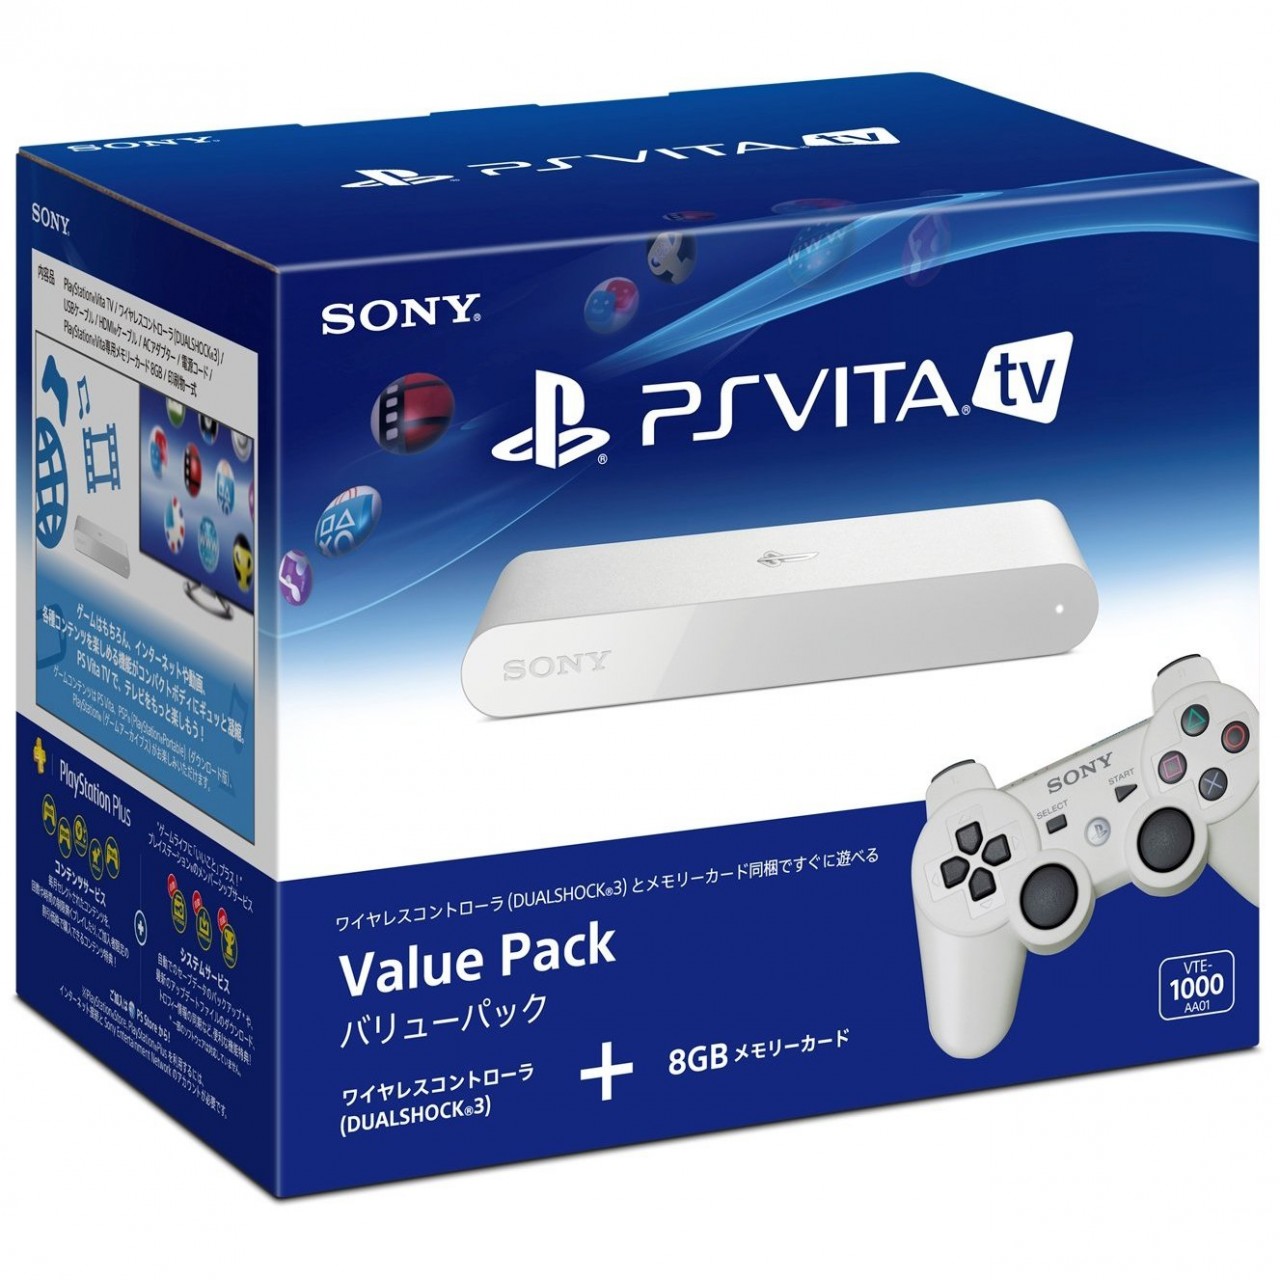 PS Vita TV Value Pack - JPN - GSE - Game Source Entertainment 電玩